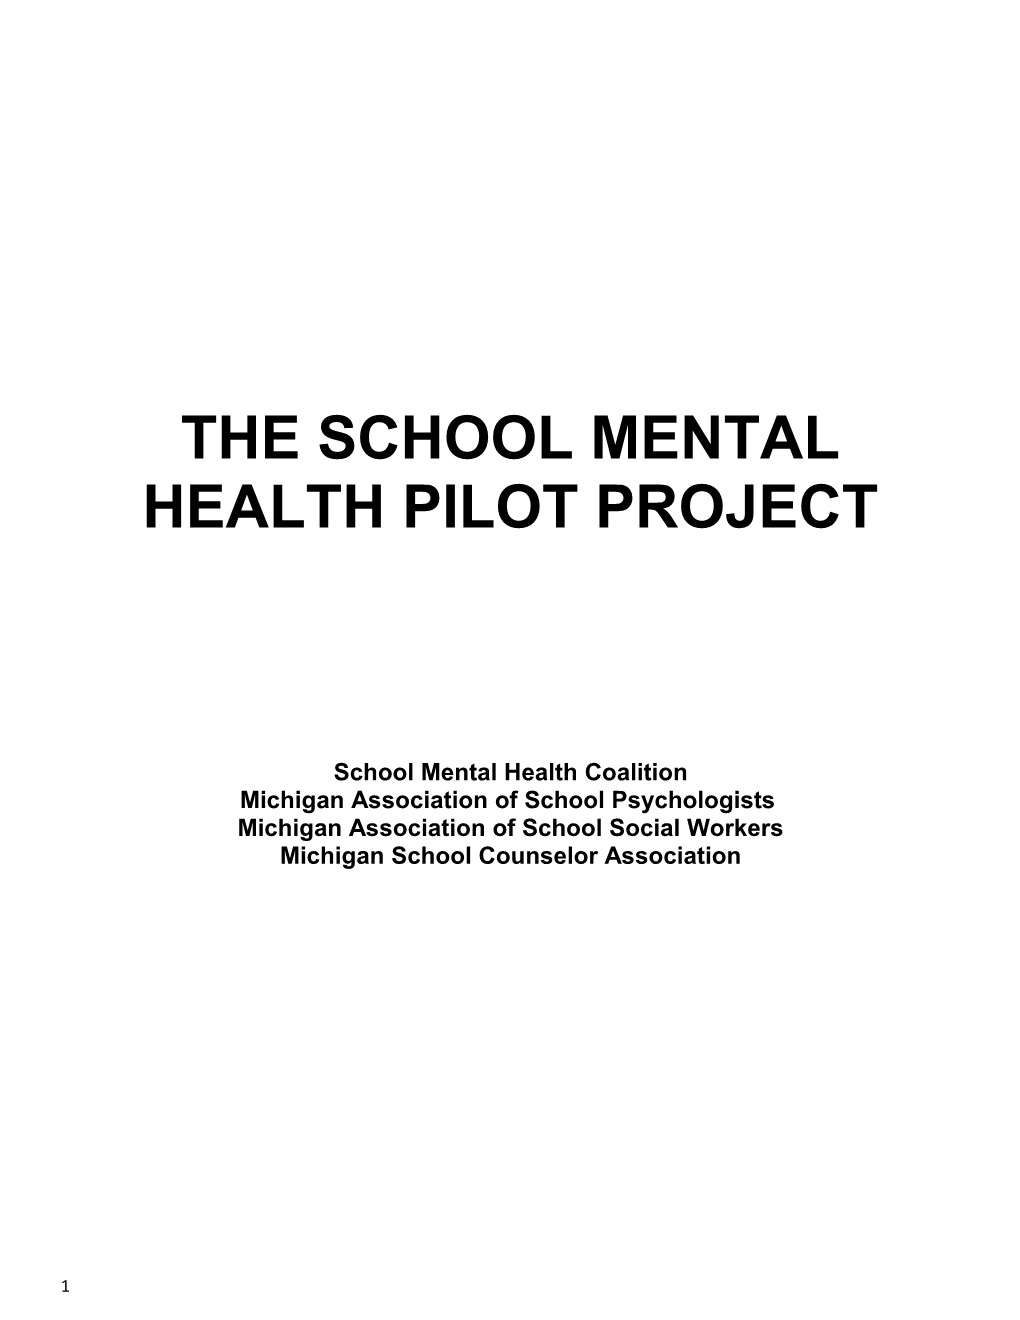 The School Mental Health Pilot Project